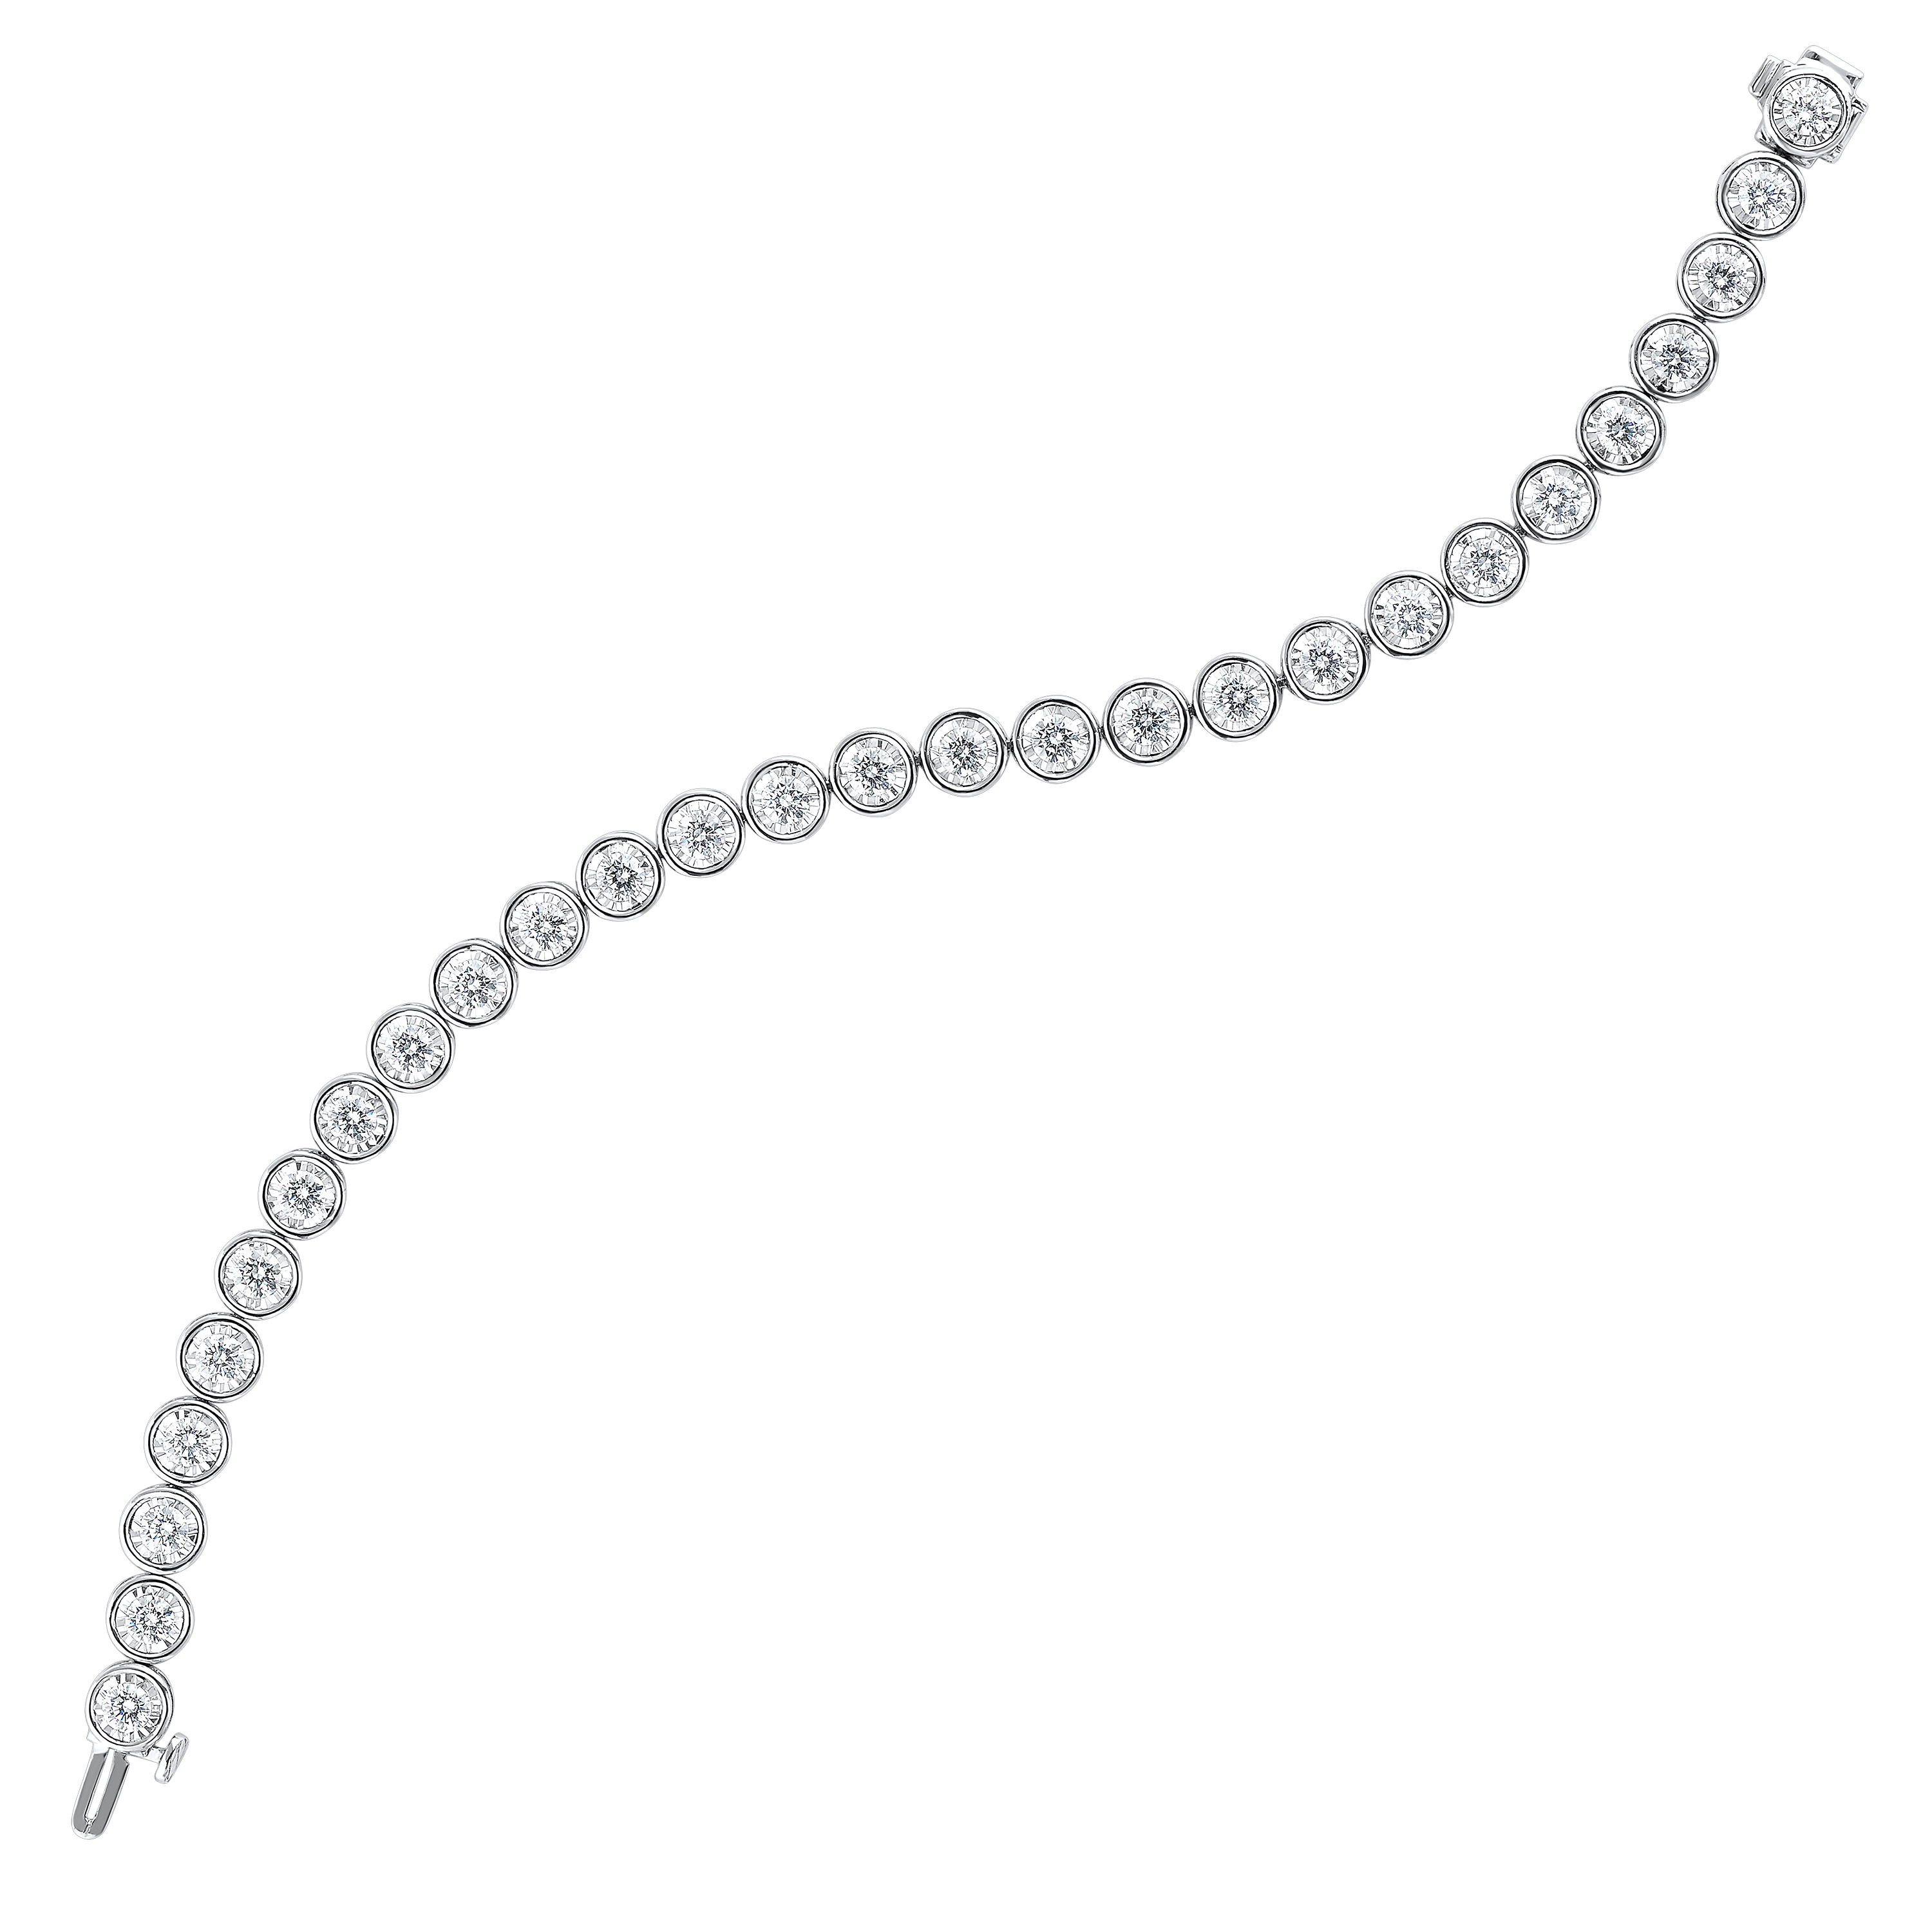 BW James Jewelers Bracelet 16 Page Christmas Catalog Offer 14K Diamond Bracelet 1 ctw